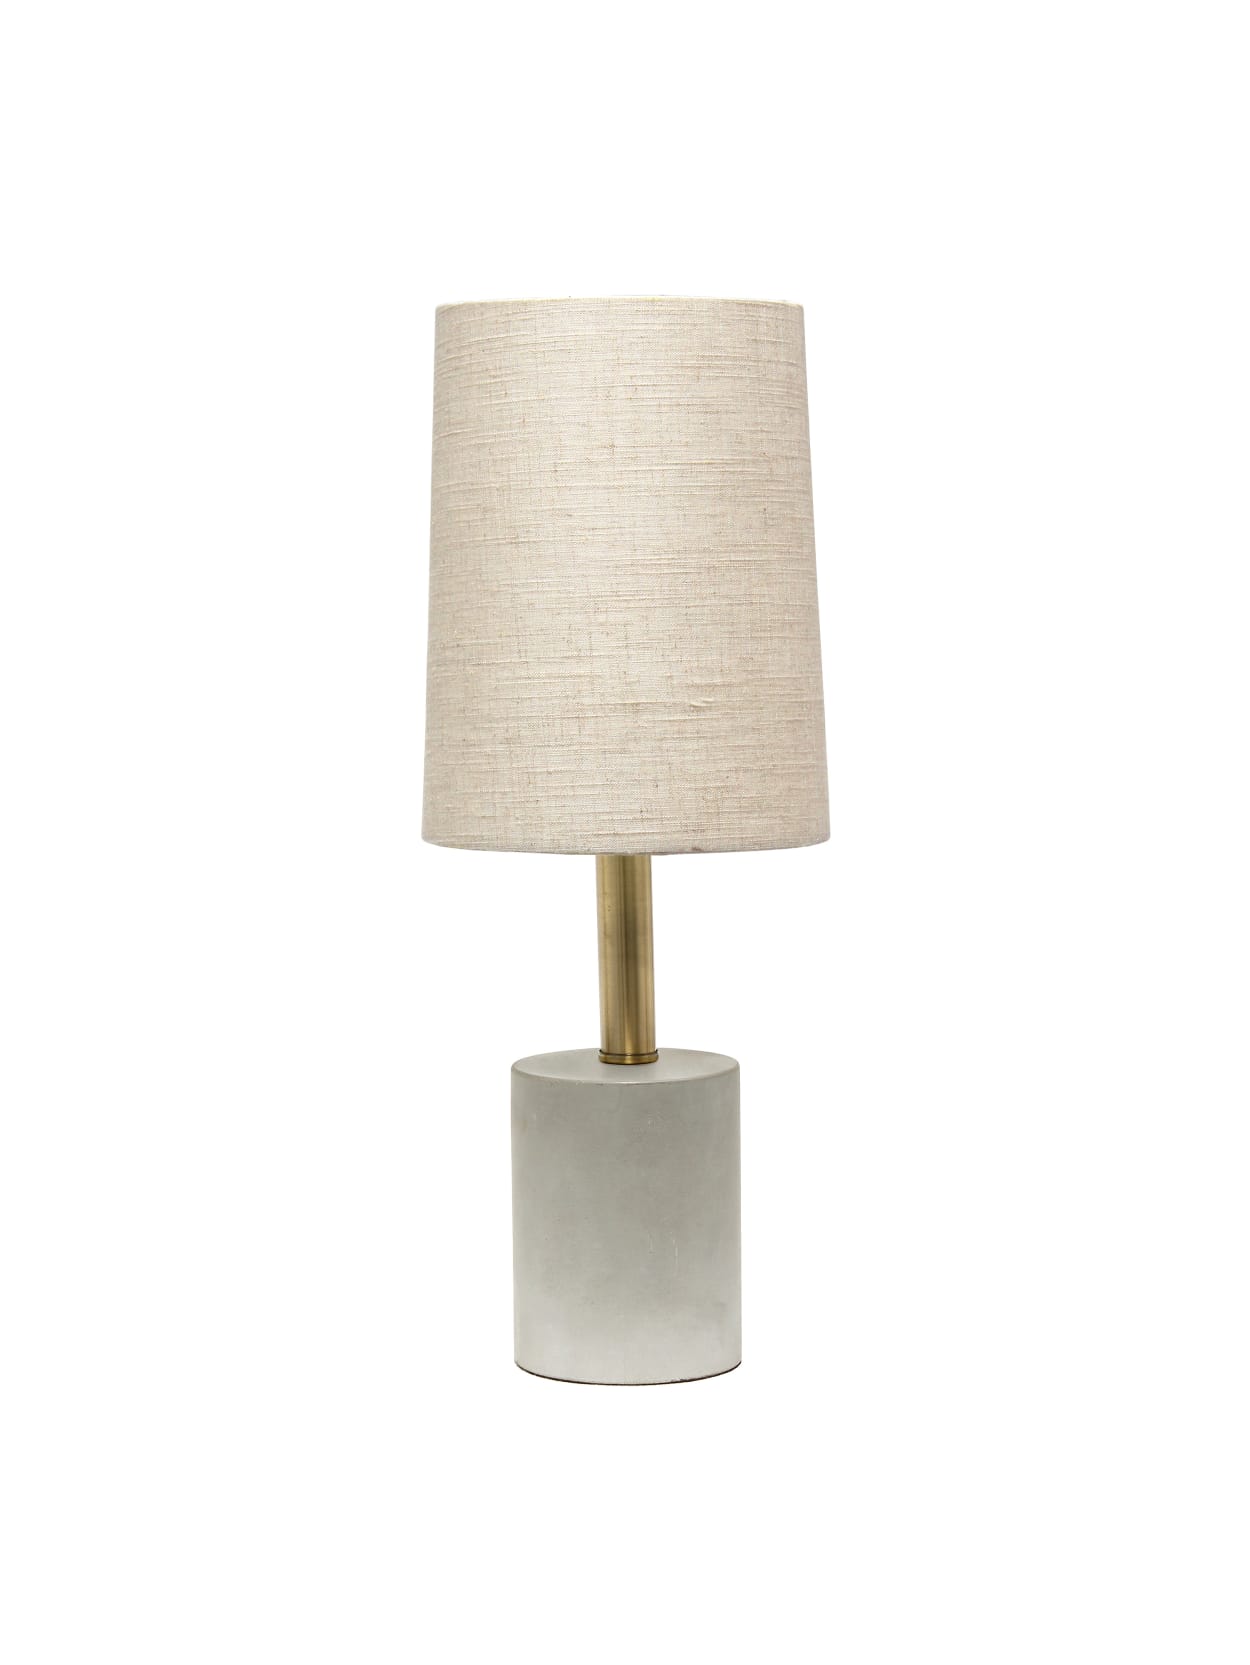 concrete base table lamp